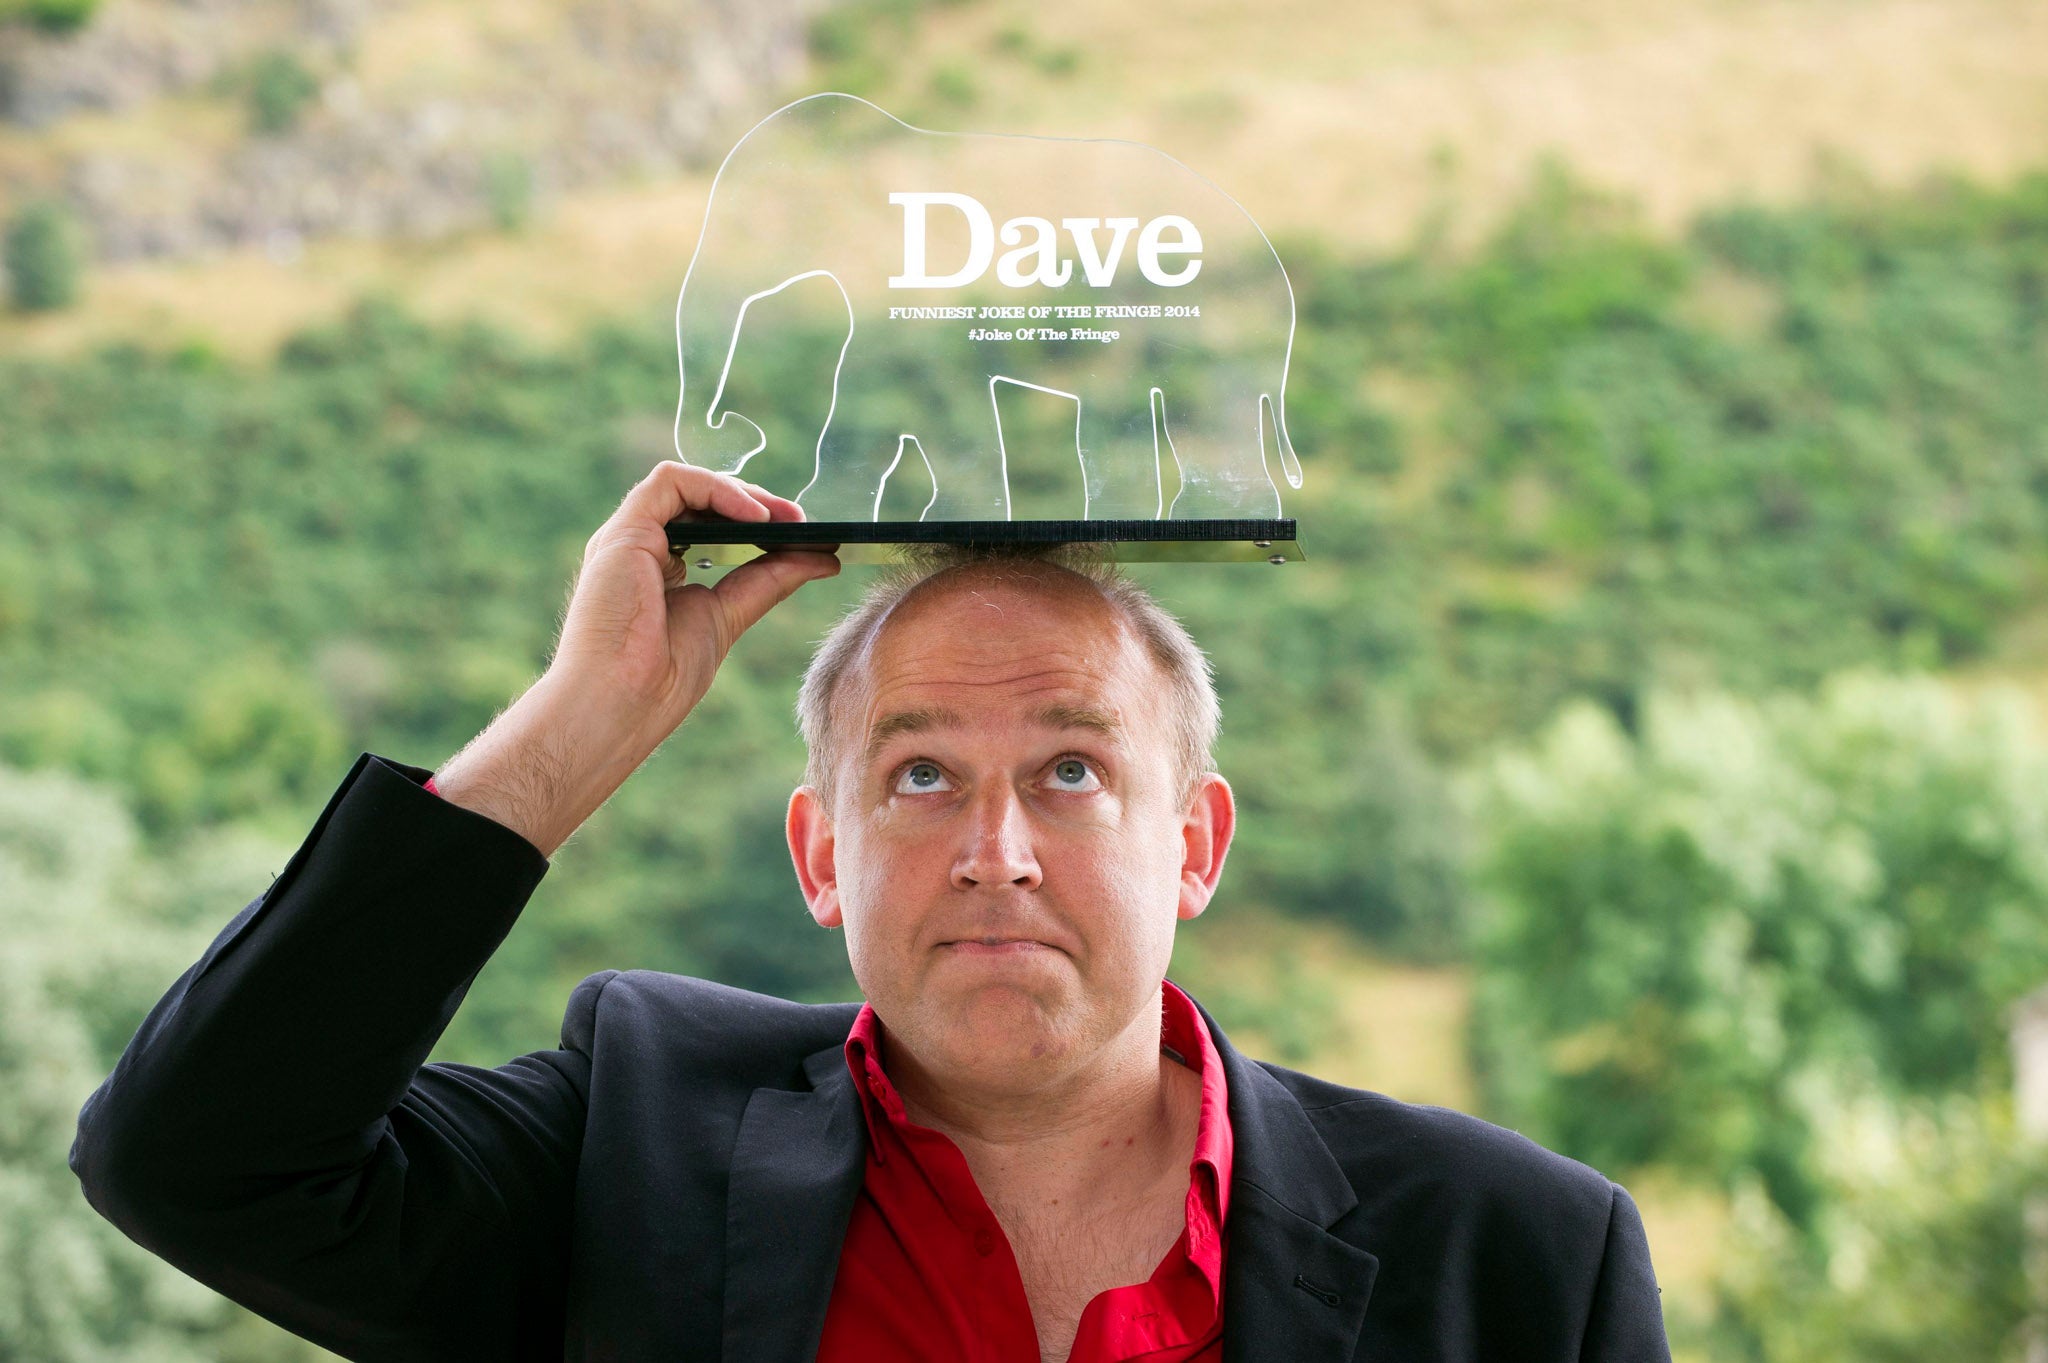 Tim Vine has won the funniest joke award at the Edinburgh Festival 2014